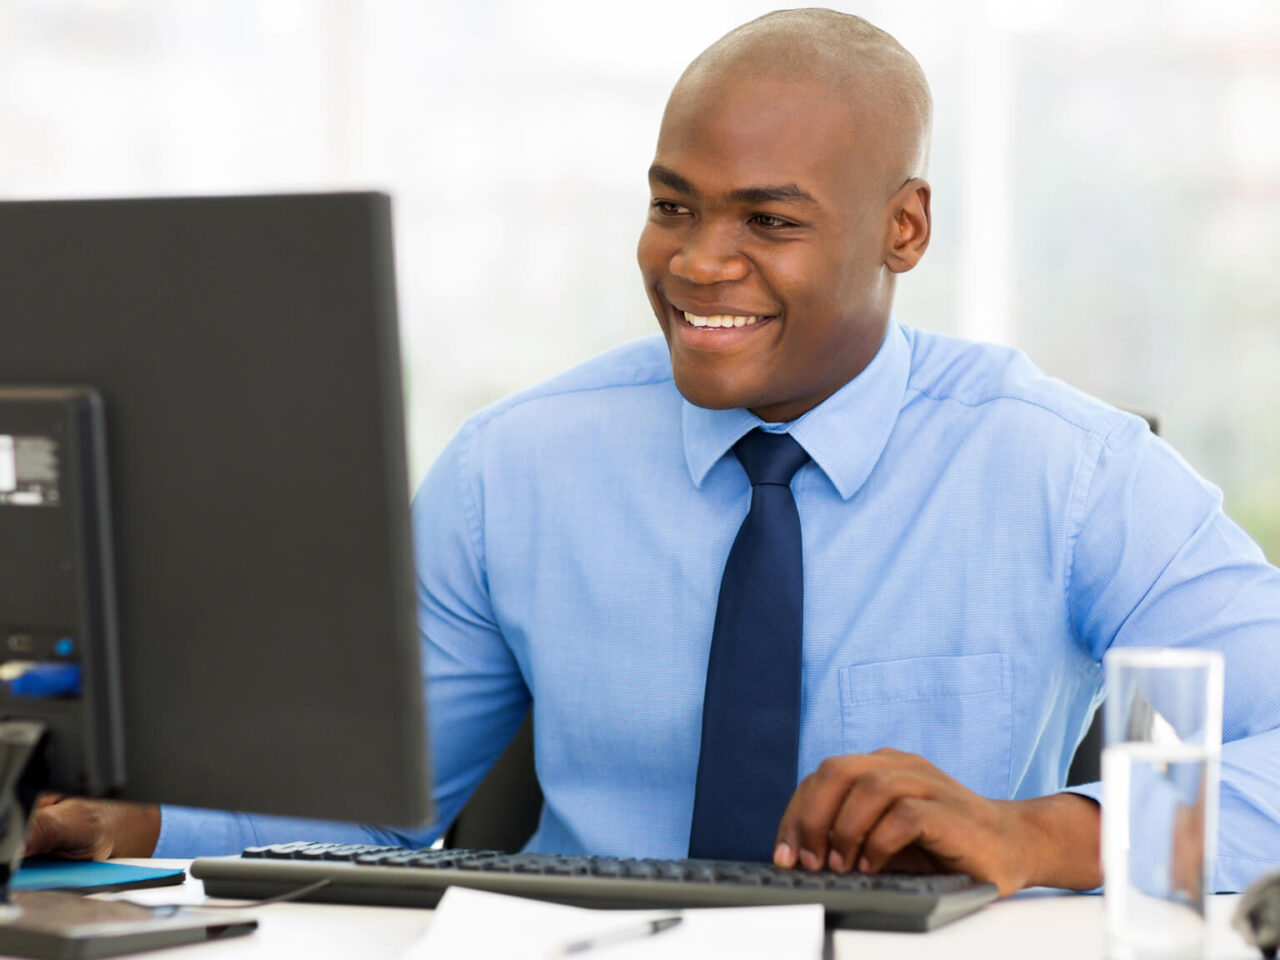 Businessman smiling and using a desktop computer